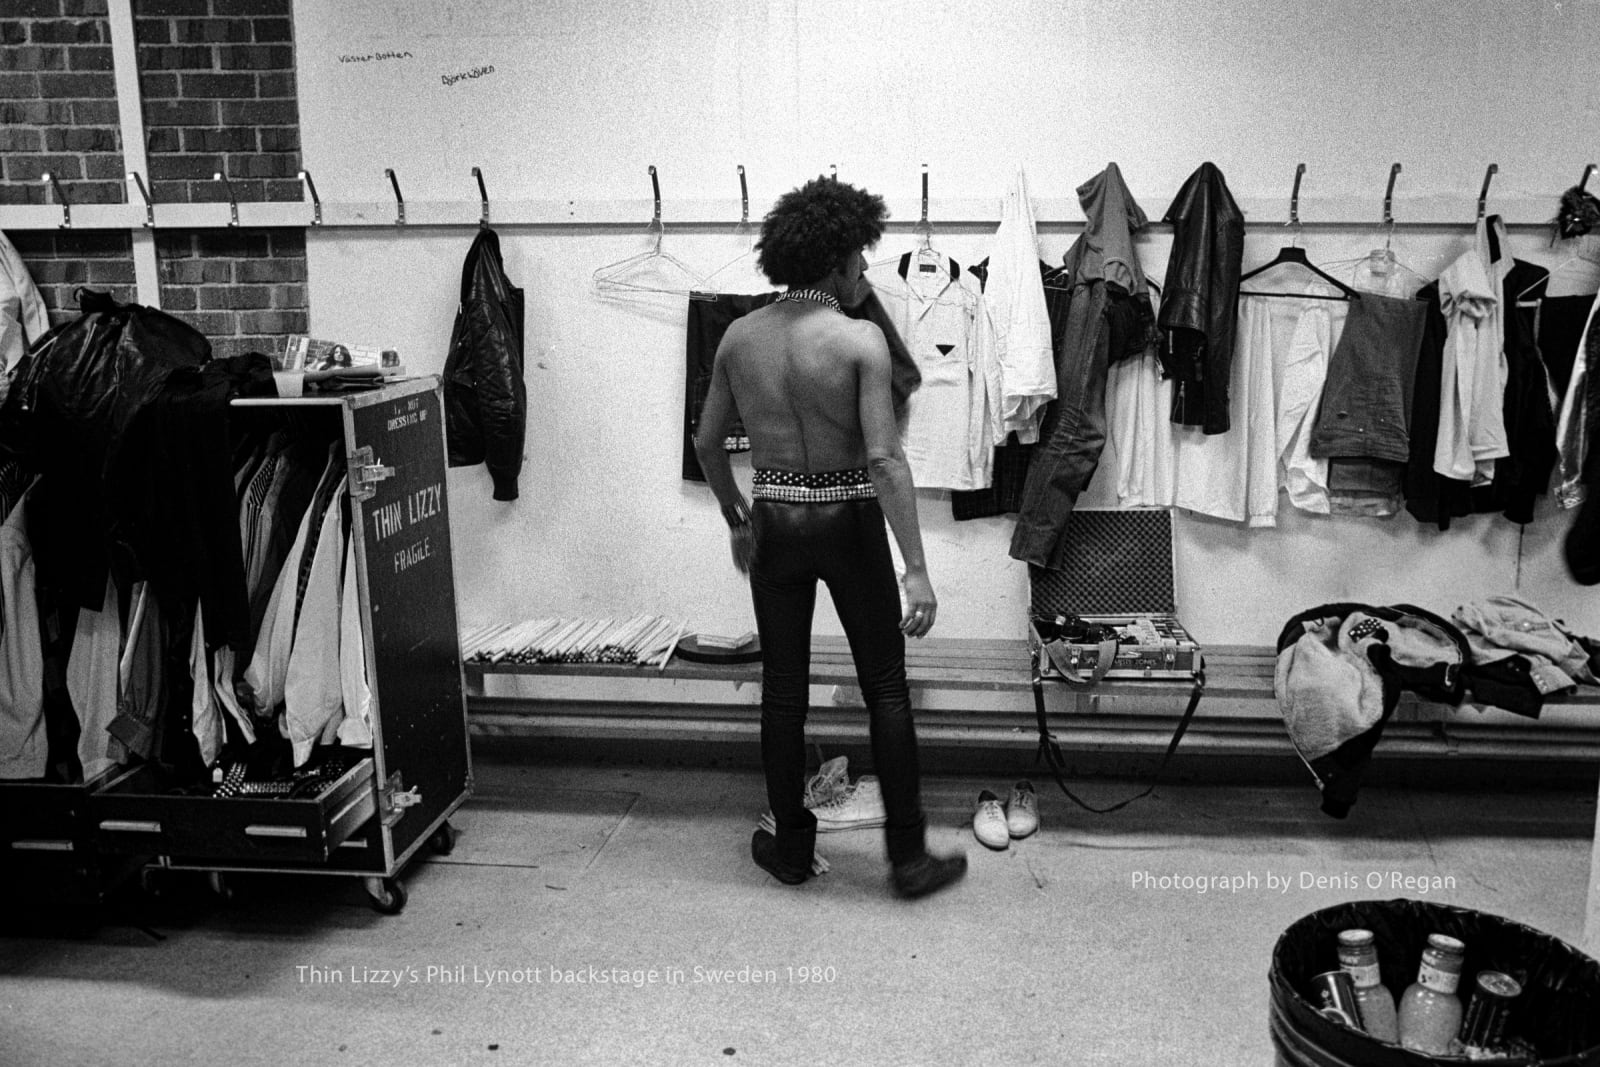 THIN LIZZY, Philip Lynott backstage Sweden, 1981